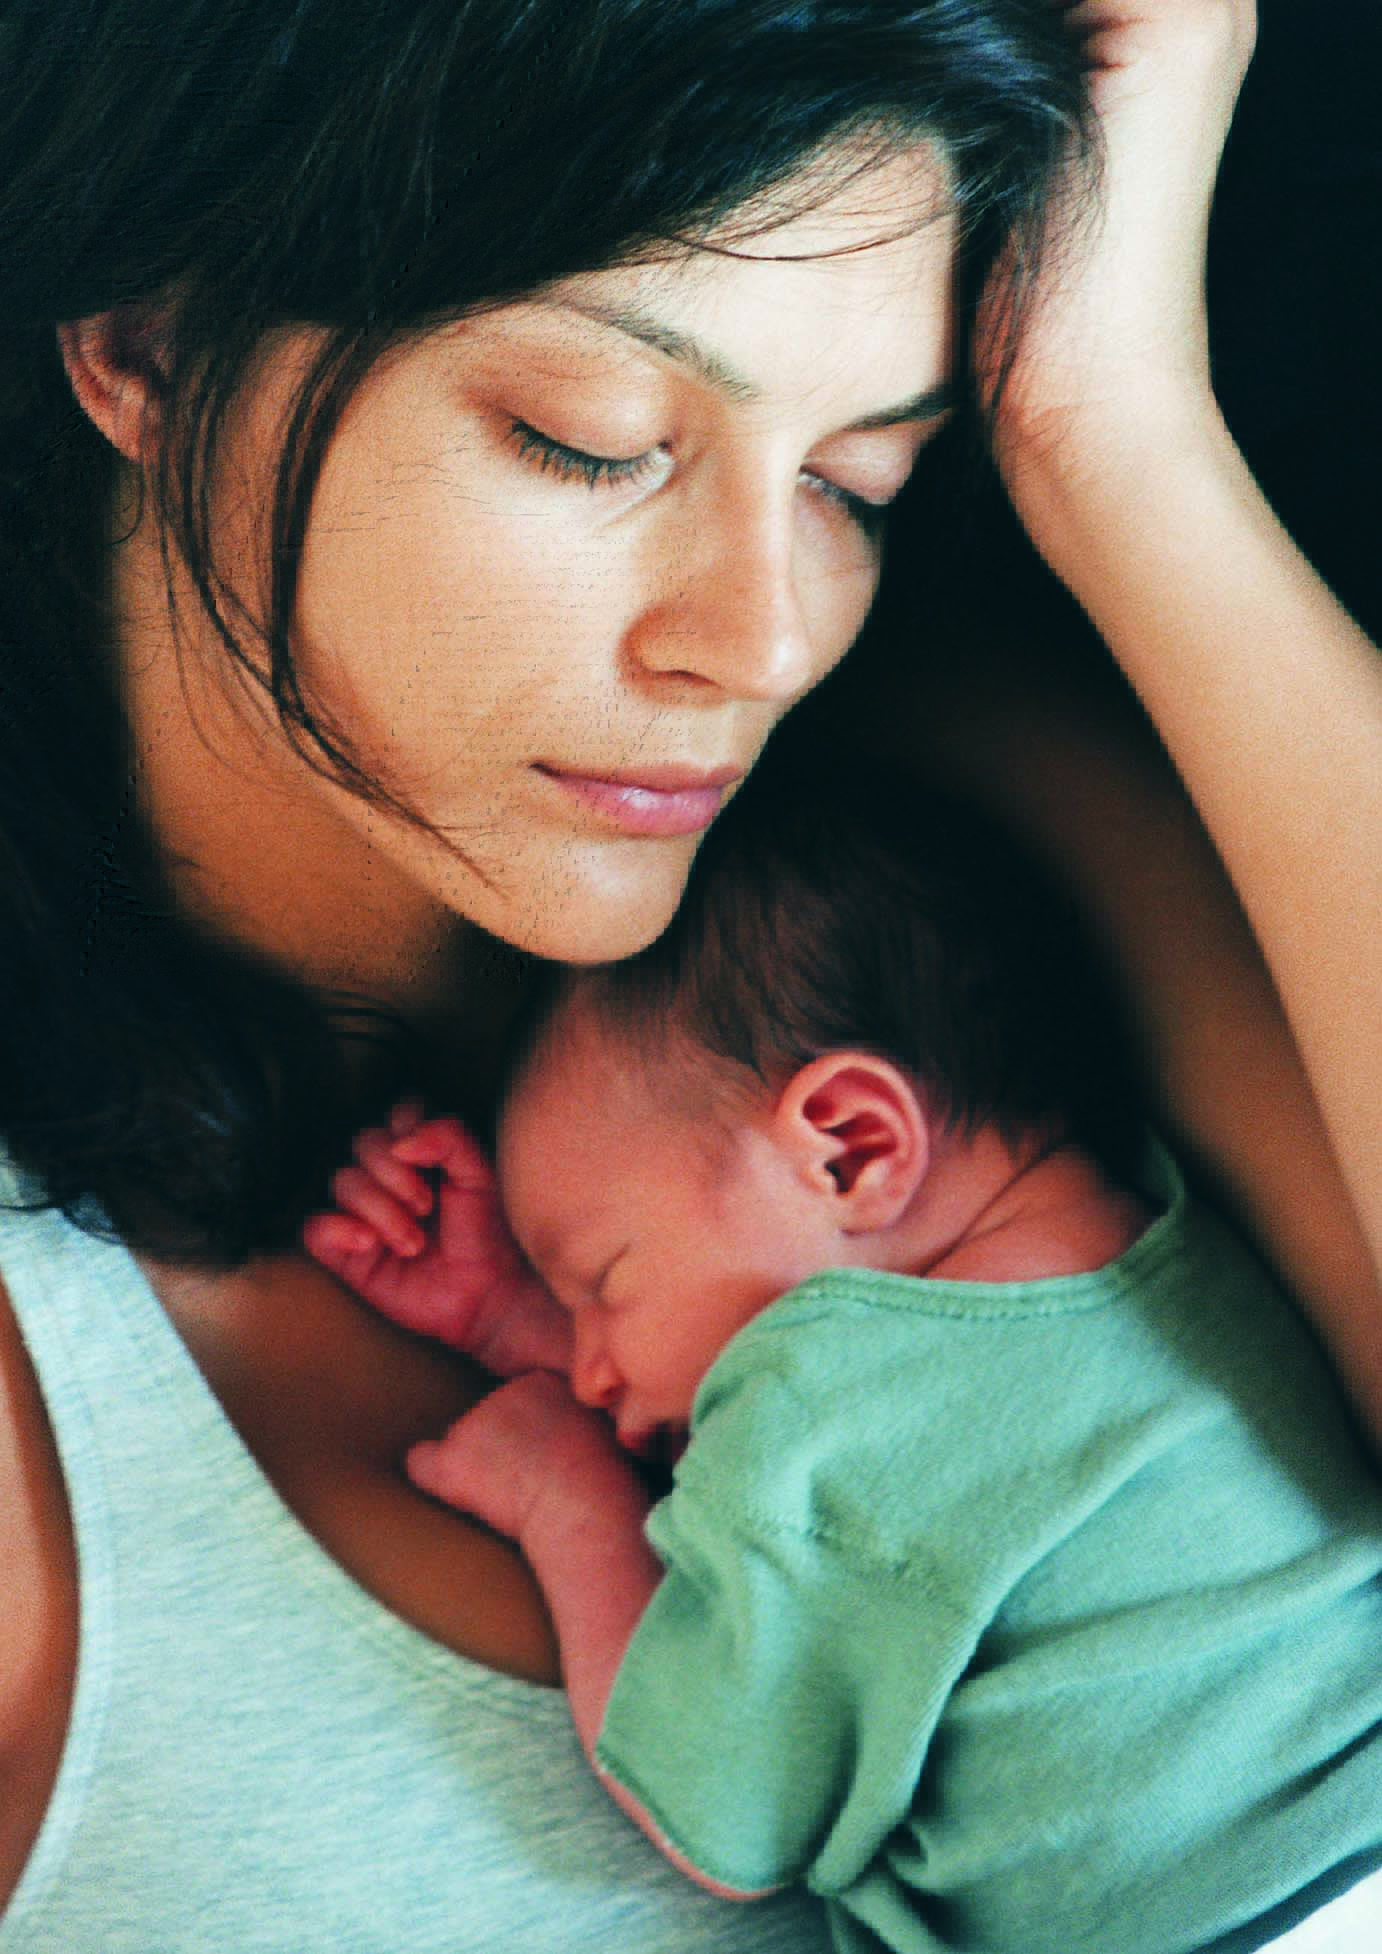 A mother holding her newborn